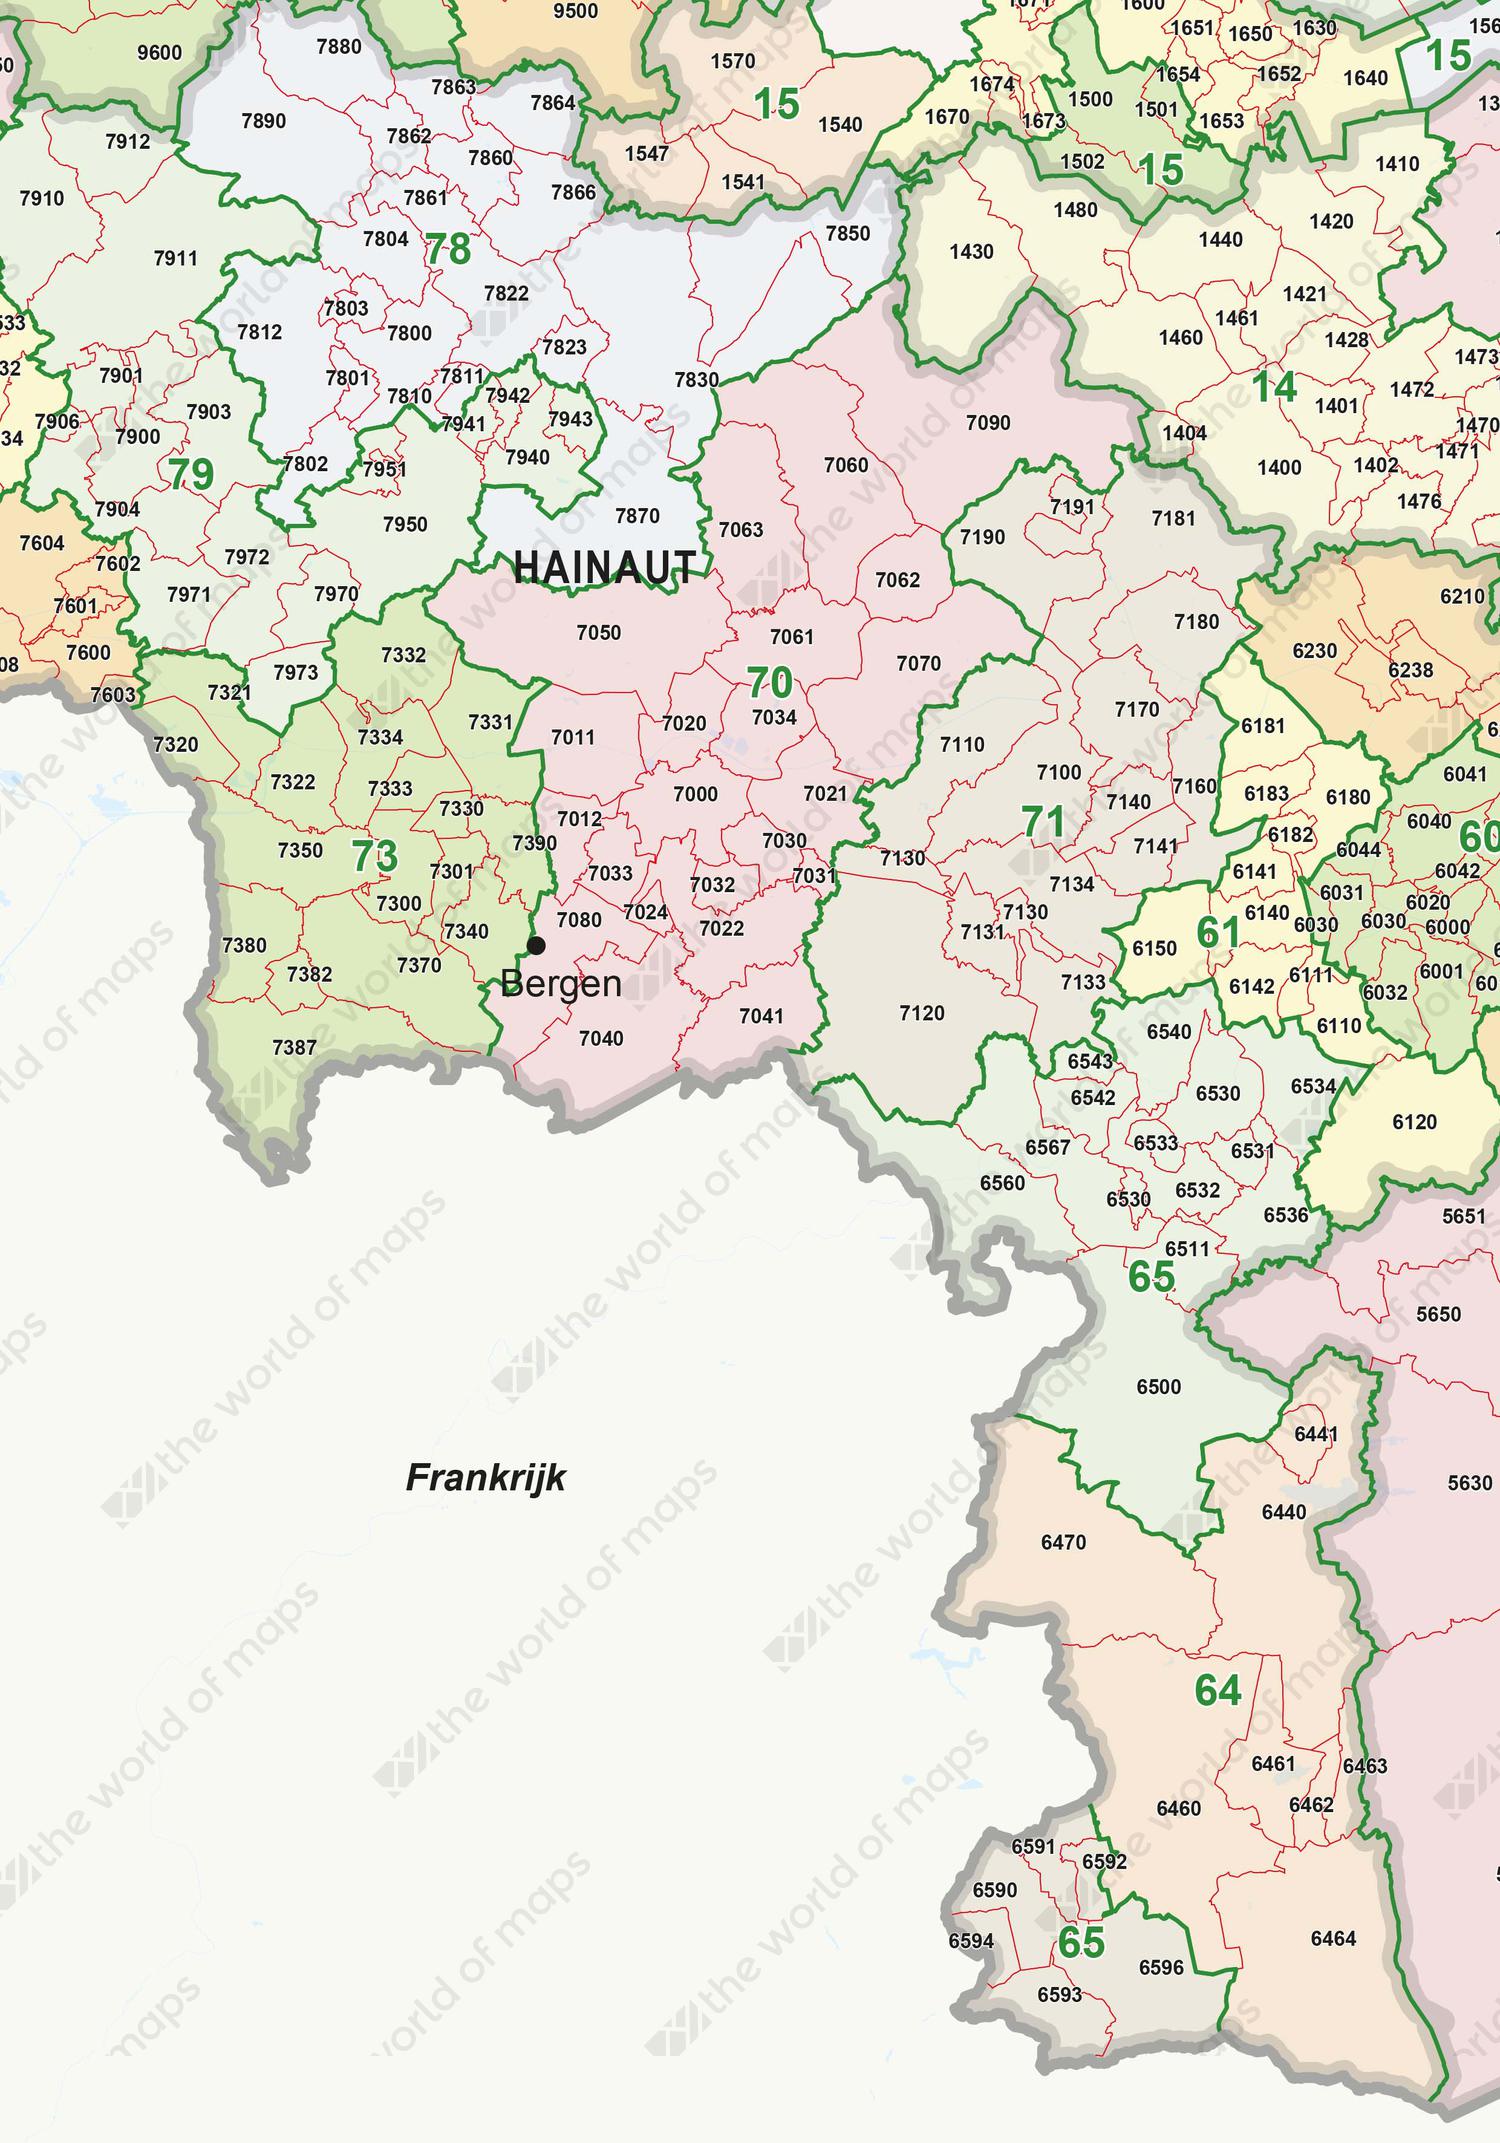 Digital Postcode Map Belgium 2-4 digits 1389 | The World of Maps.com